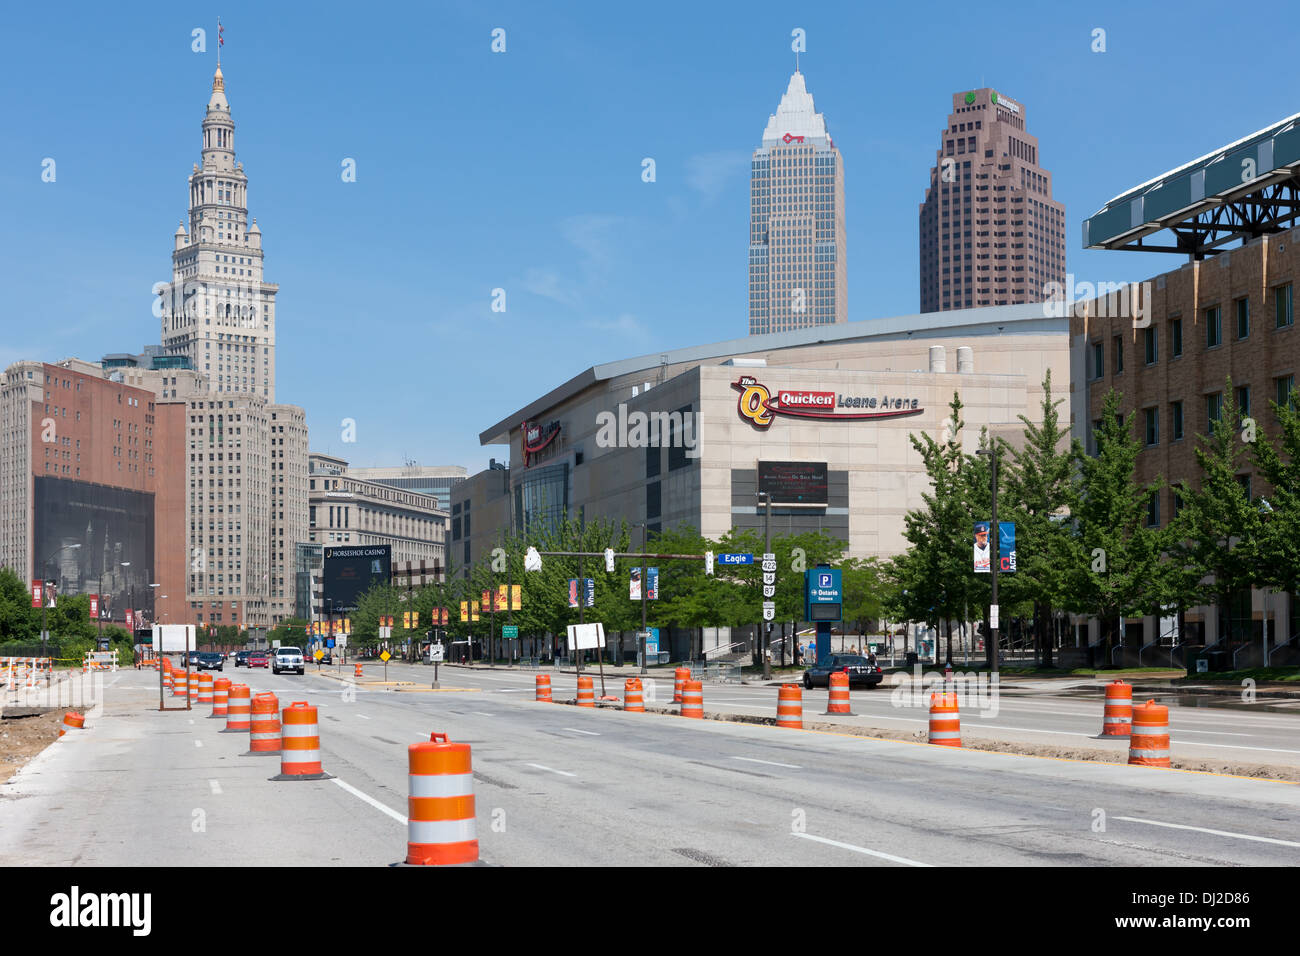 Construction barrels warn motorists of road improvements underway on Ontario Street in Cleveland, Ohio. Stock Photo